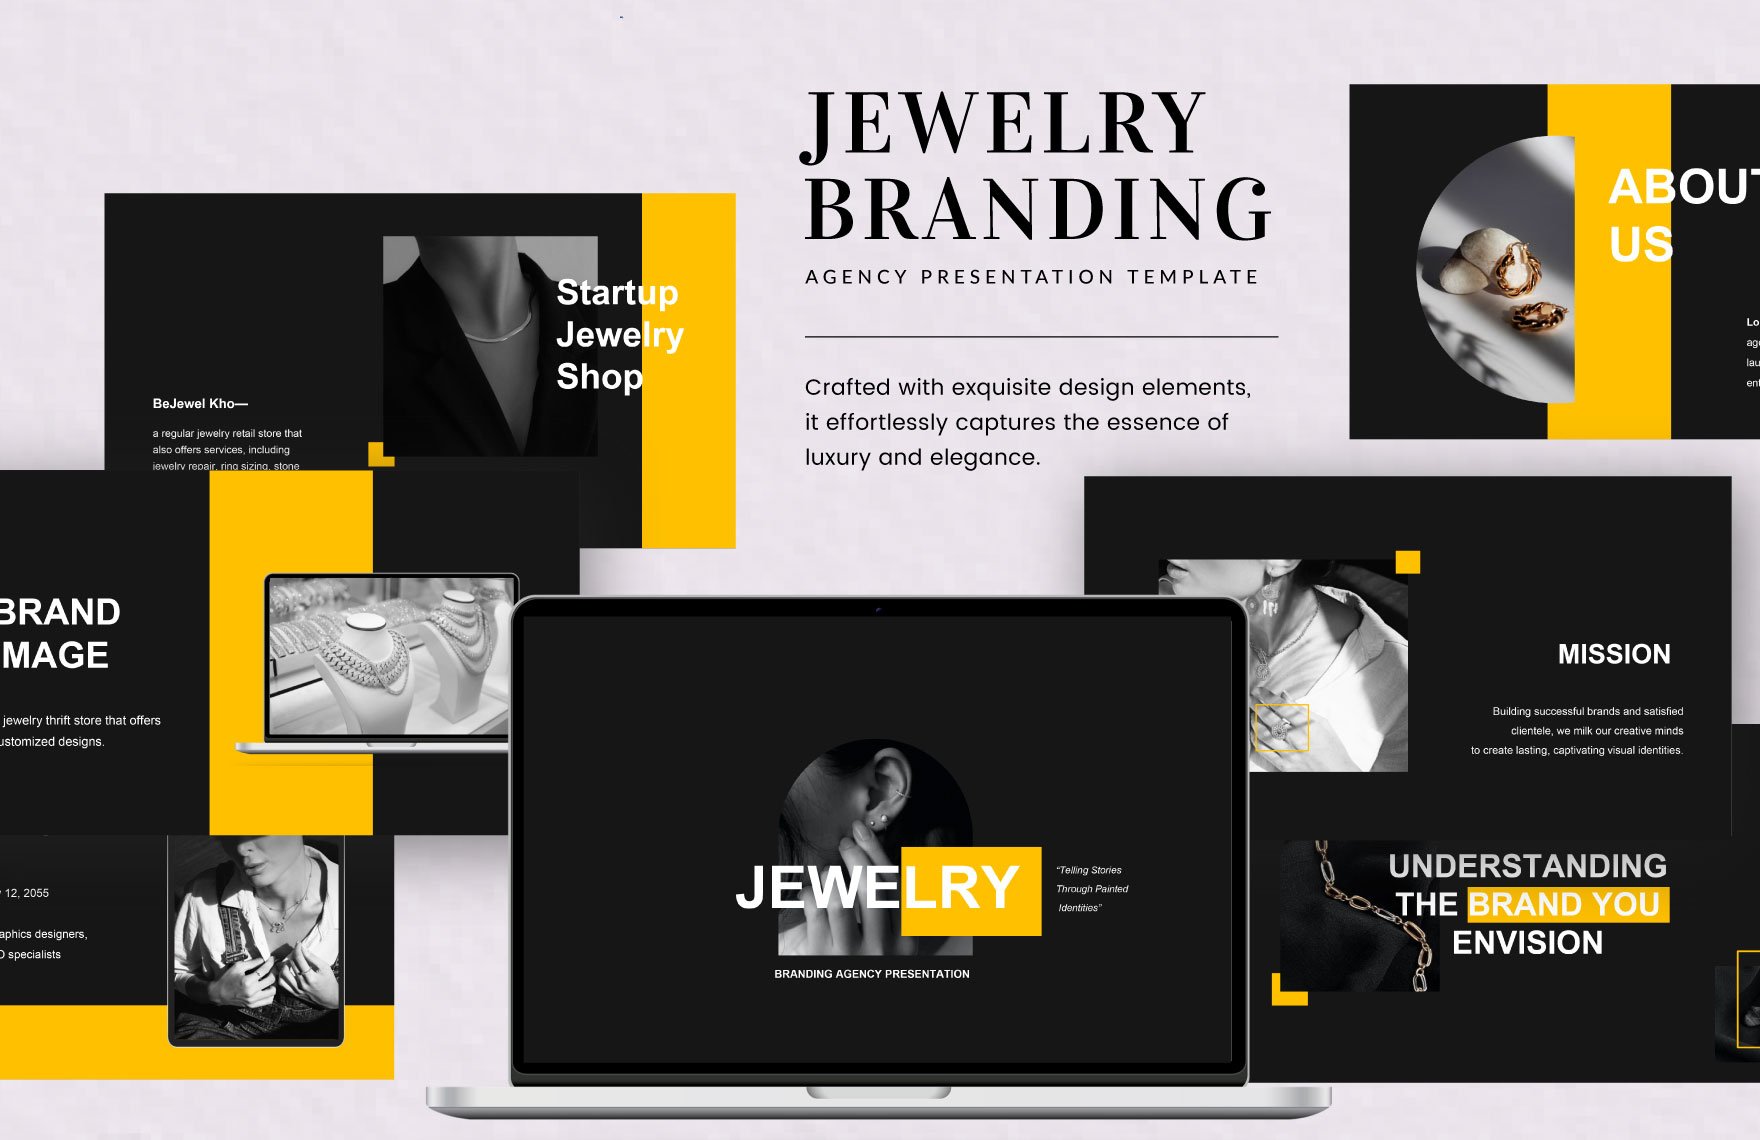 Jewelry Branding Agency Presentation